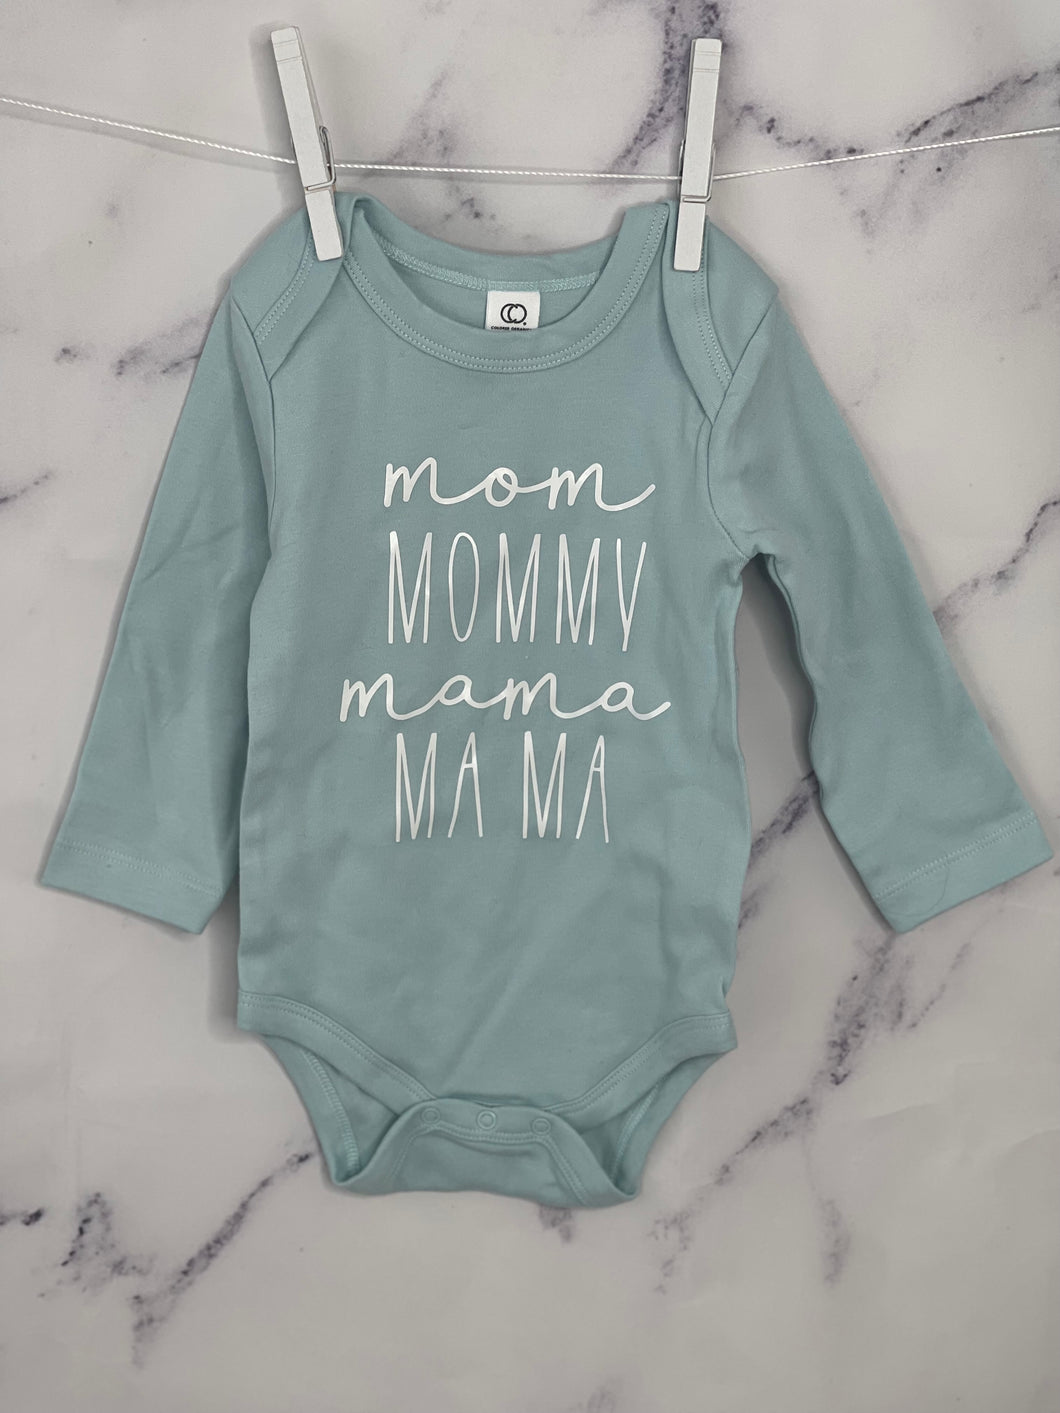 Mom, Mommy, Mama, Ma Ma Organic Cotton Long Sleeve Bodysuit